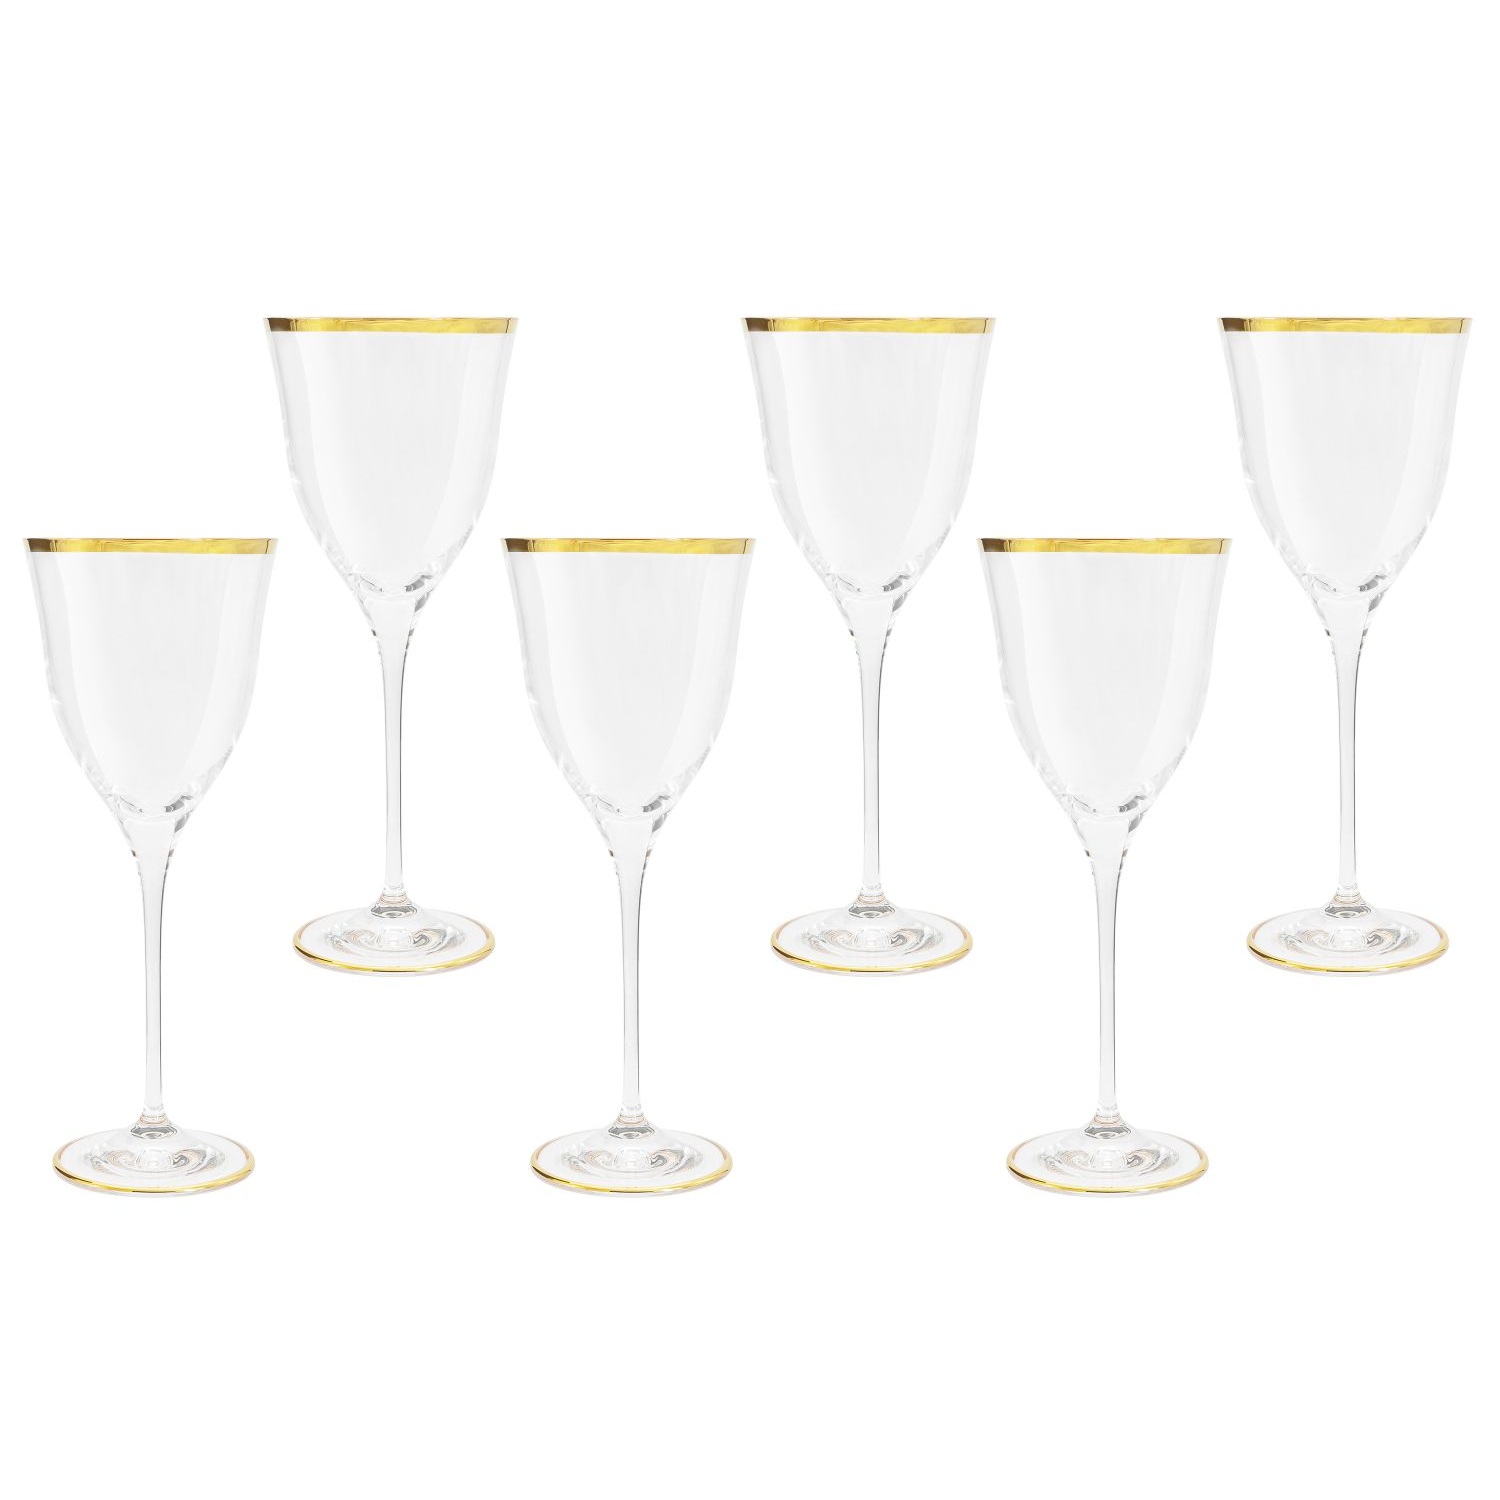 Набор бокалов для вина Same Сабина золото 6 шт набор стаканов для воды same сабина золото 6 шт